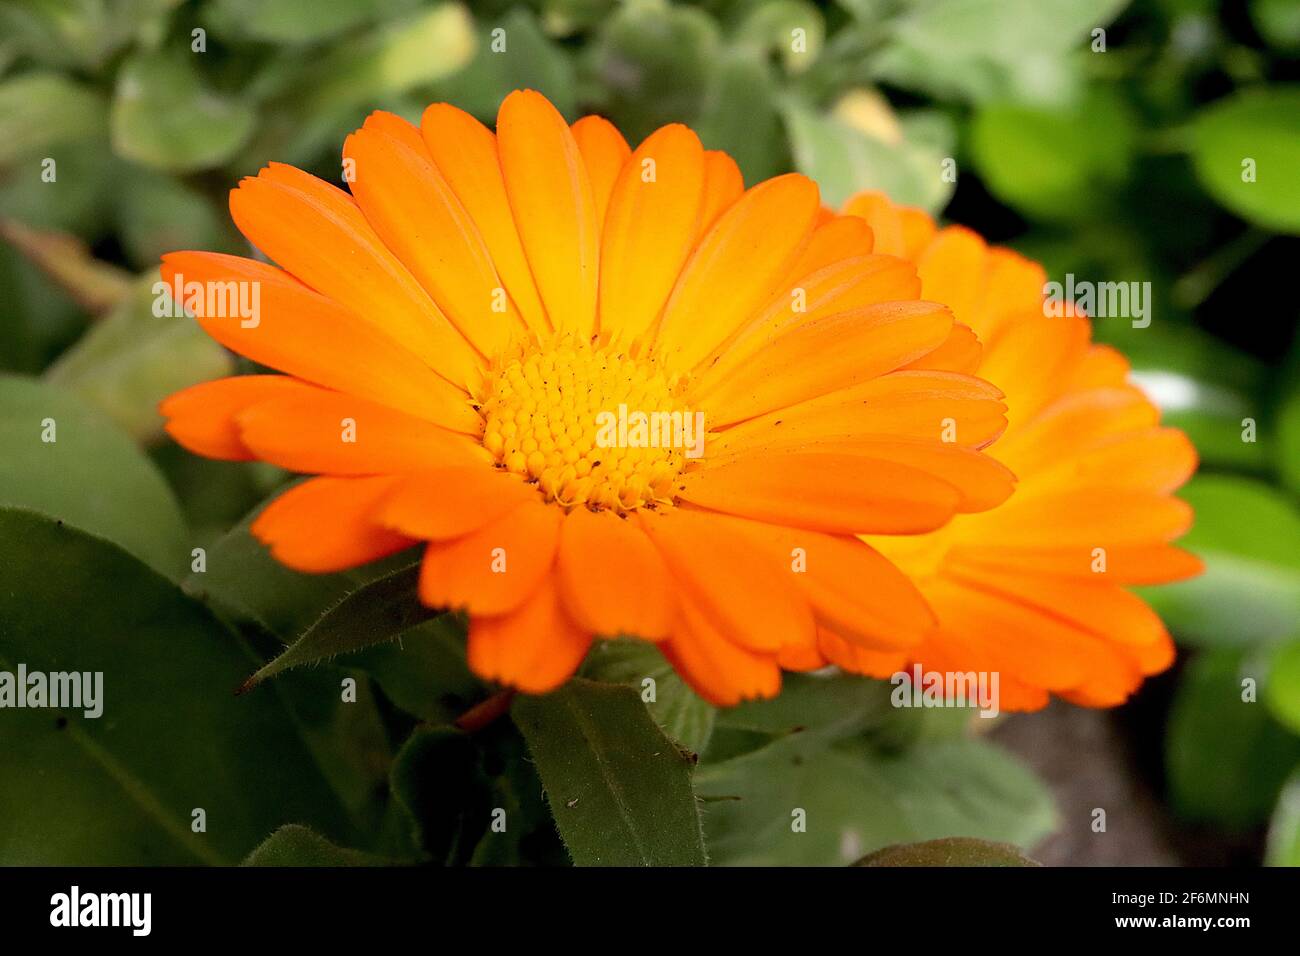 Calendula officinalis  Pot marigold – orange daisy-like flowers with medicinal properties,  April, England, UK Stock Photo